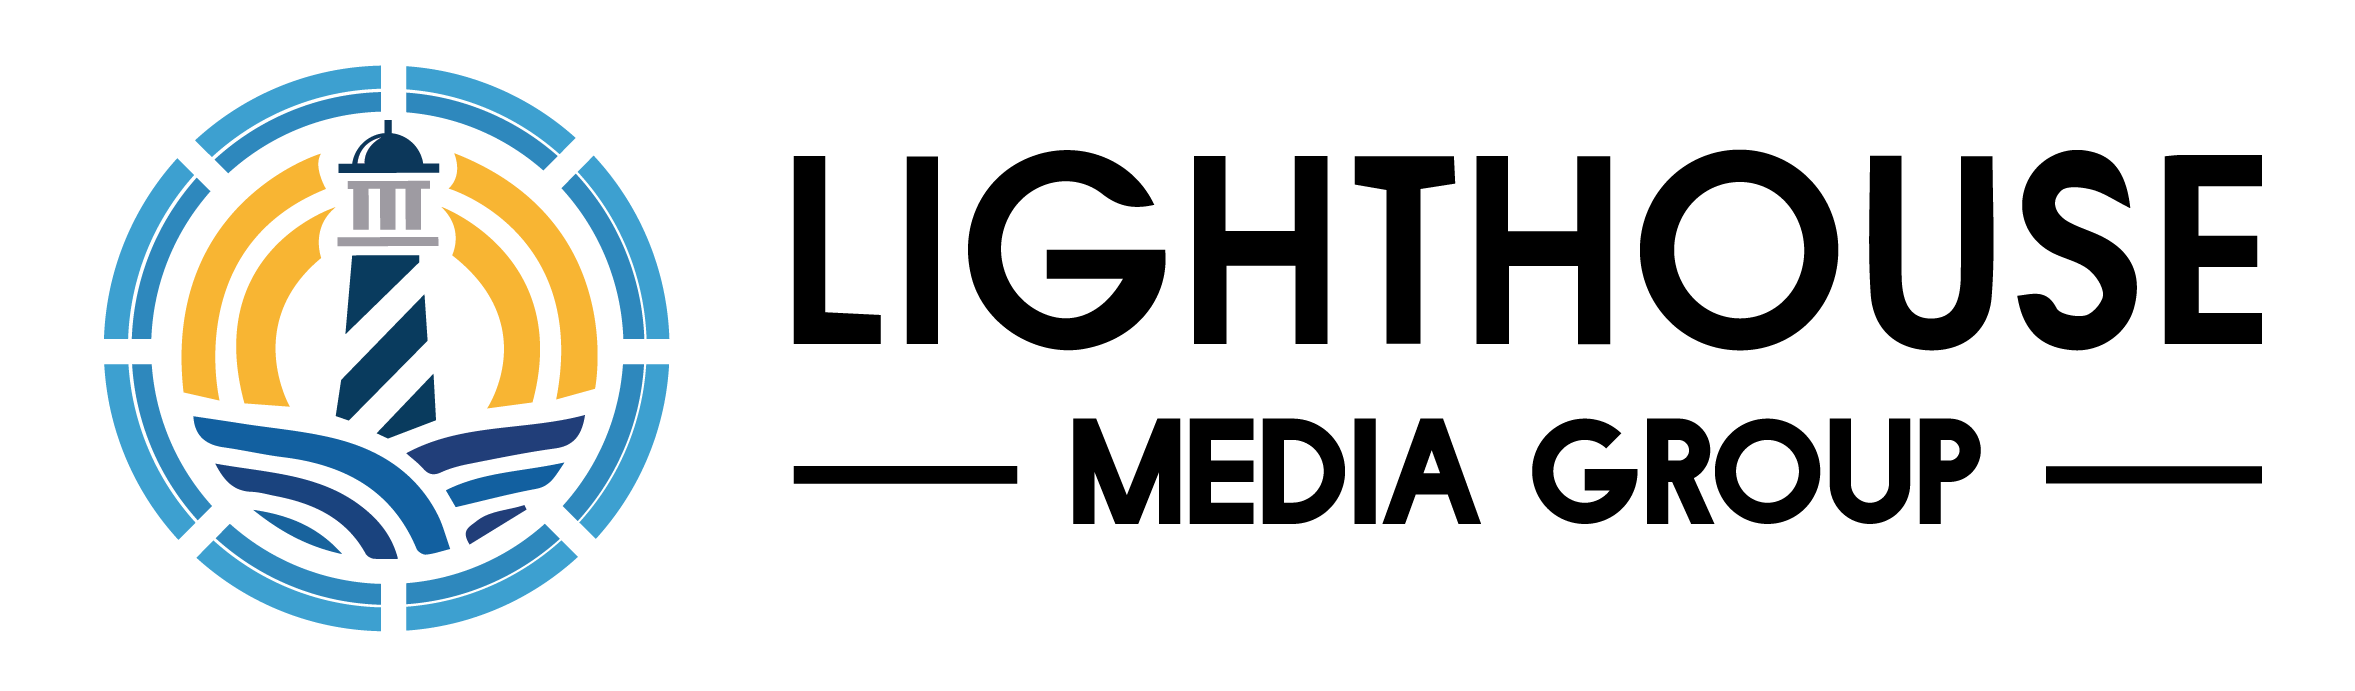 Lighthouse Media Group Ltd.